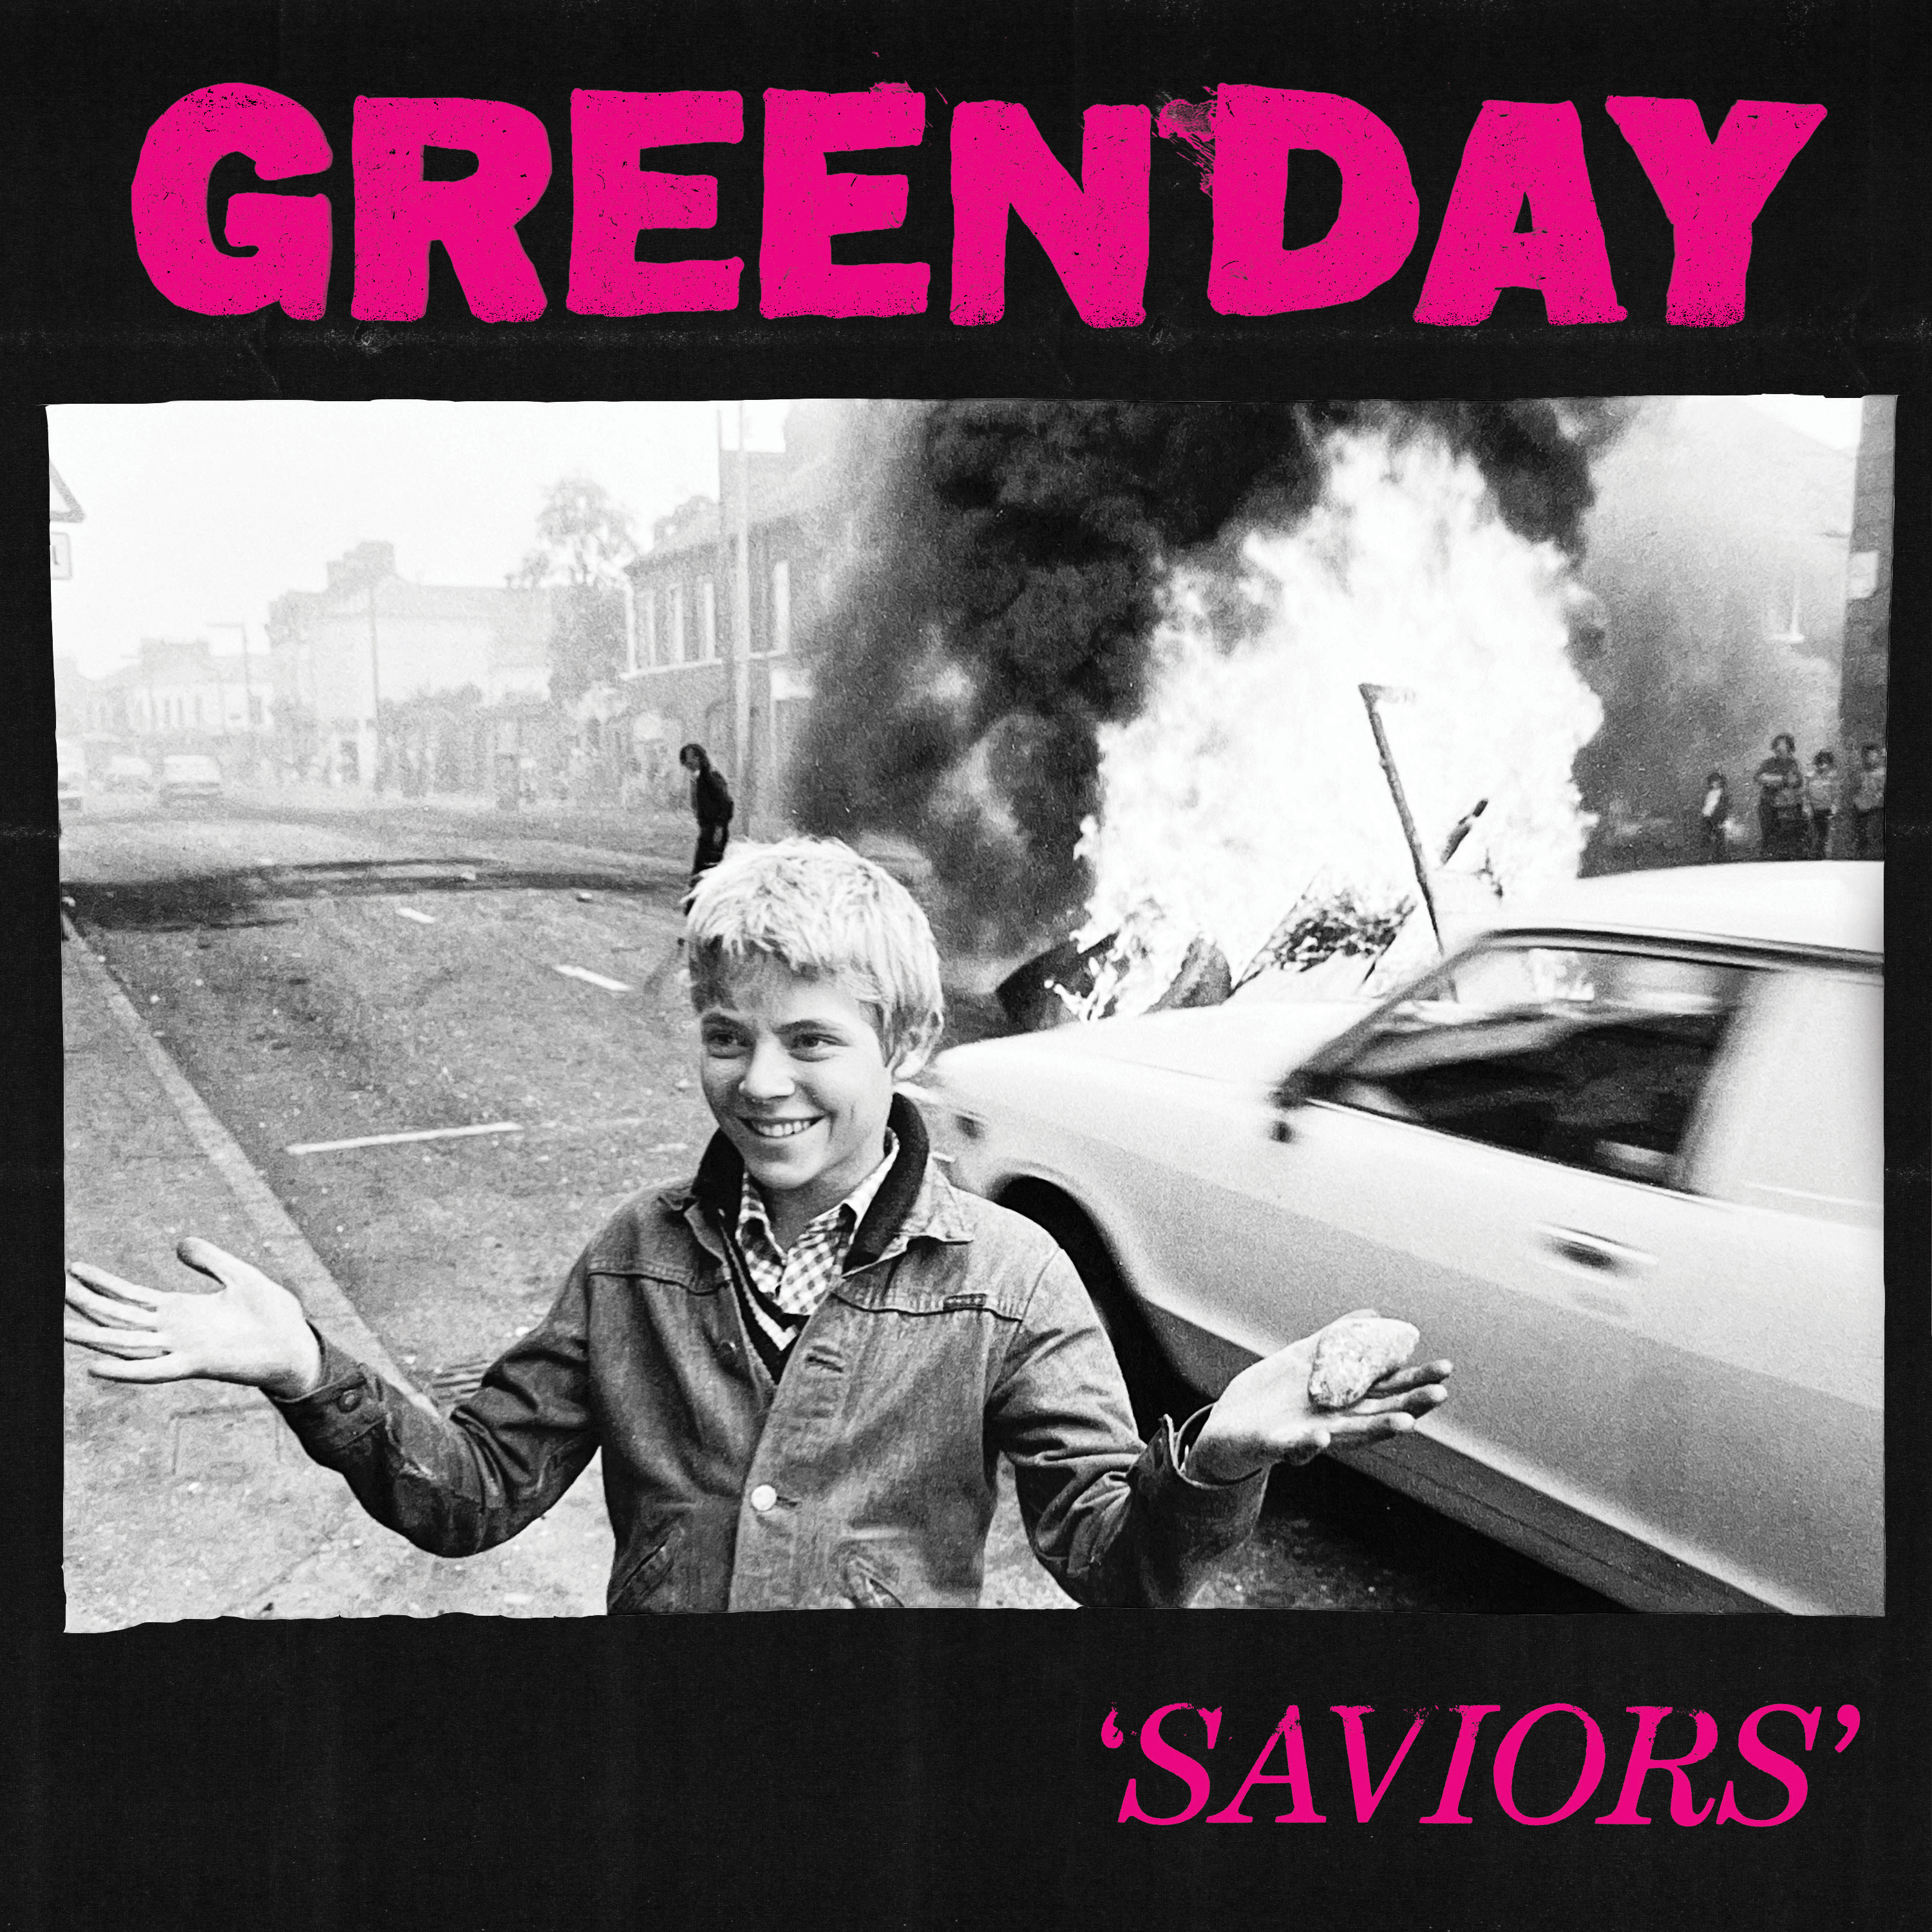 Green Day - Saviors - Album Art